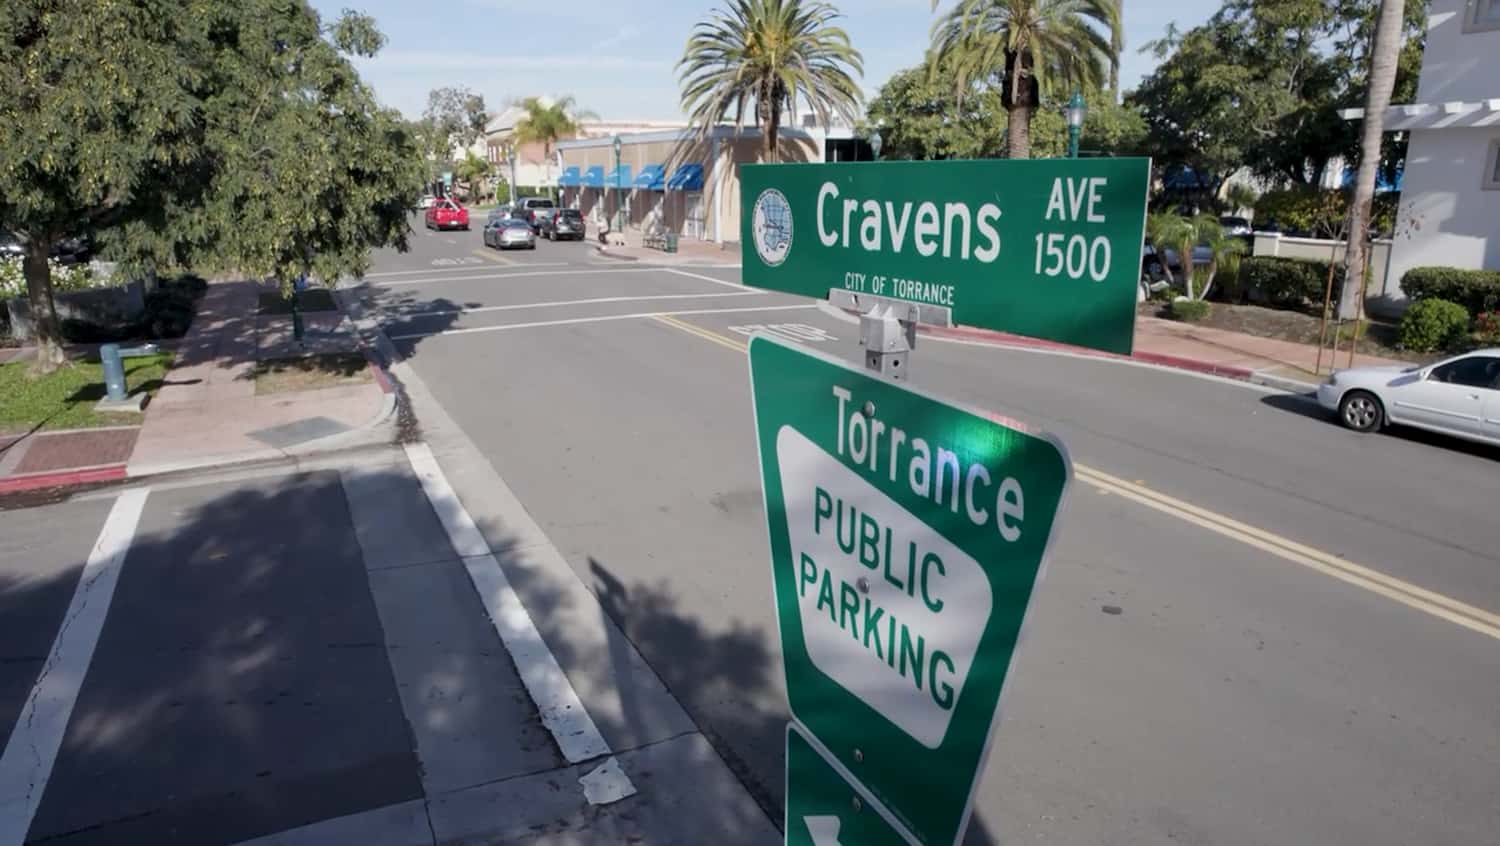 Cravens Avenue street sign sits above a Torrance Public Parking direction sign.